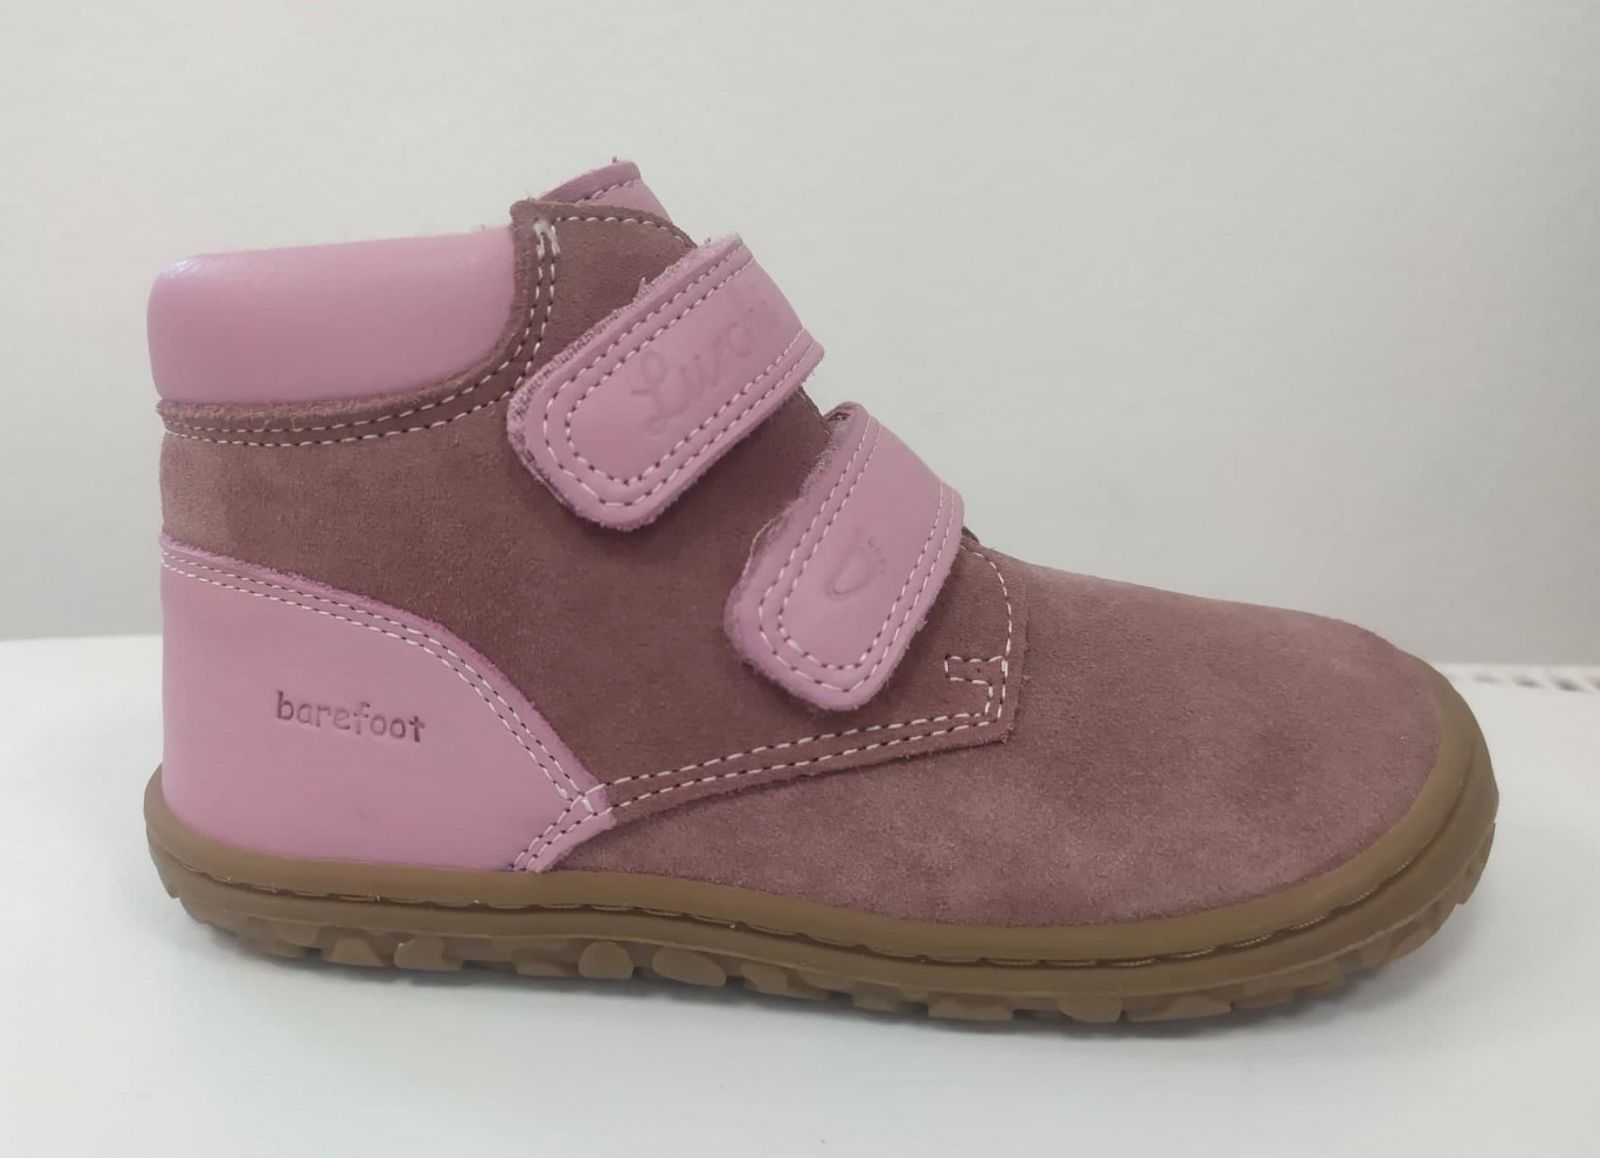 Barefoot Lurchi barefoot shoes - Nino nappa rosa